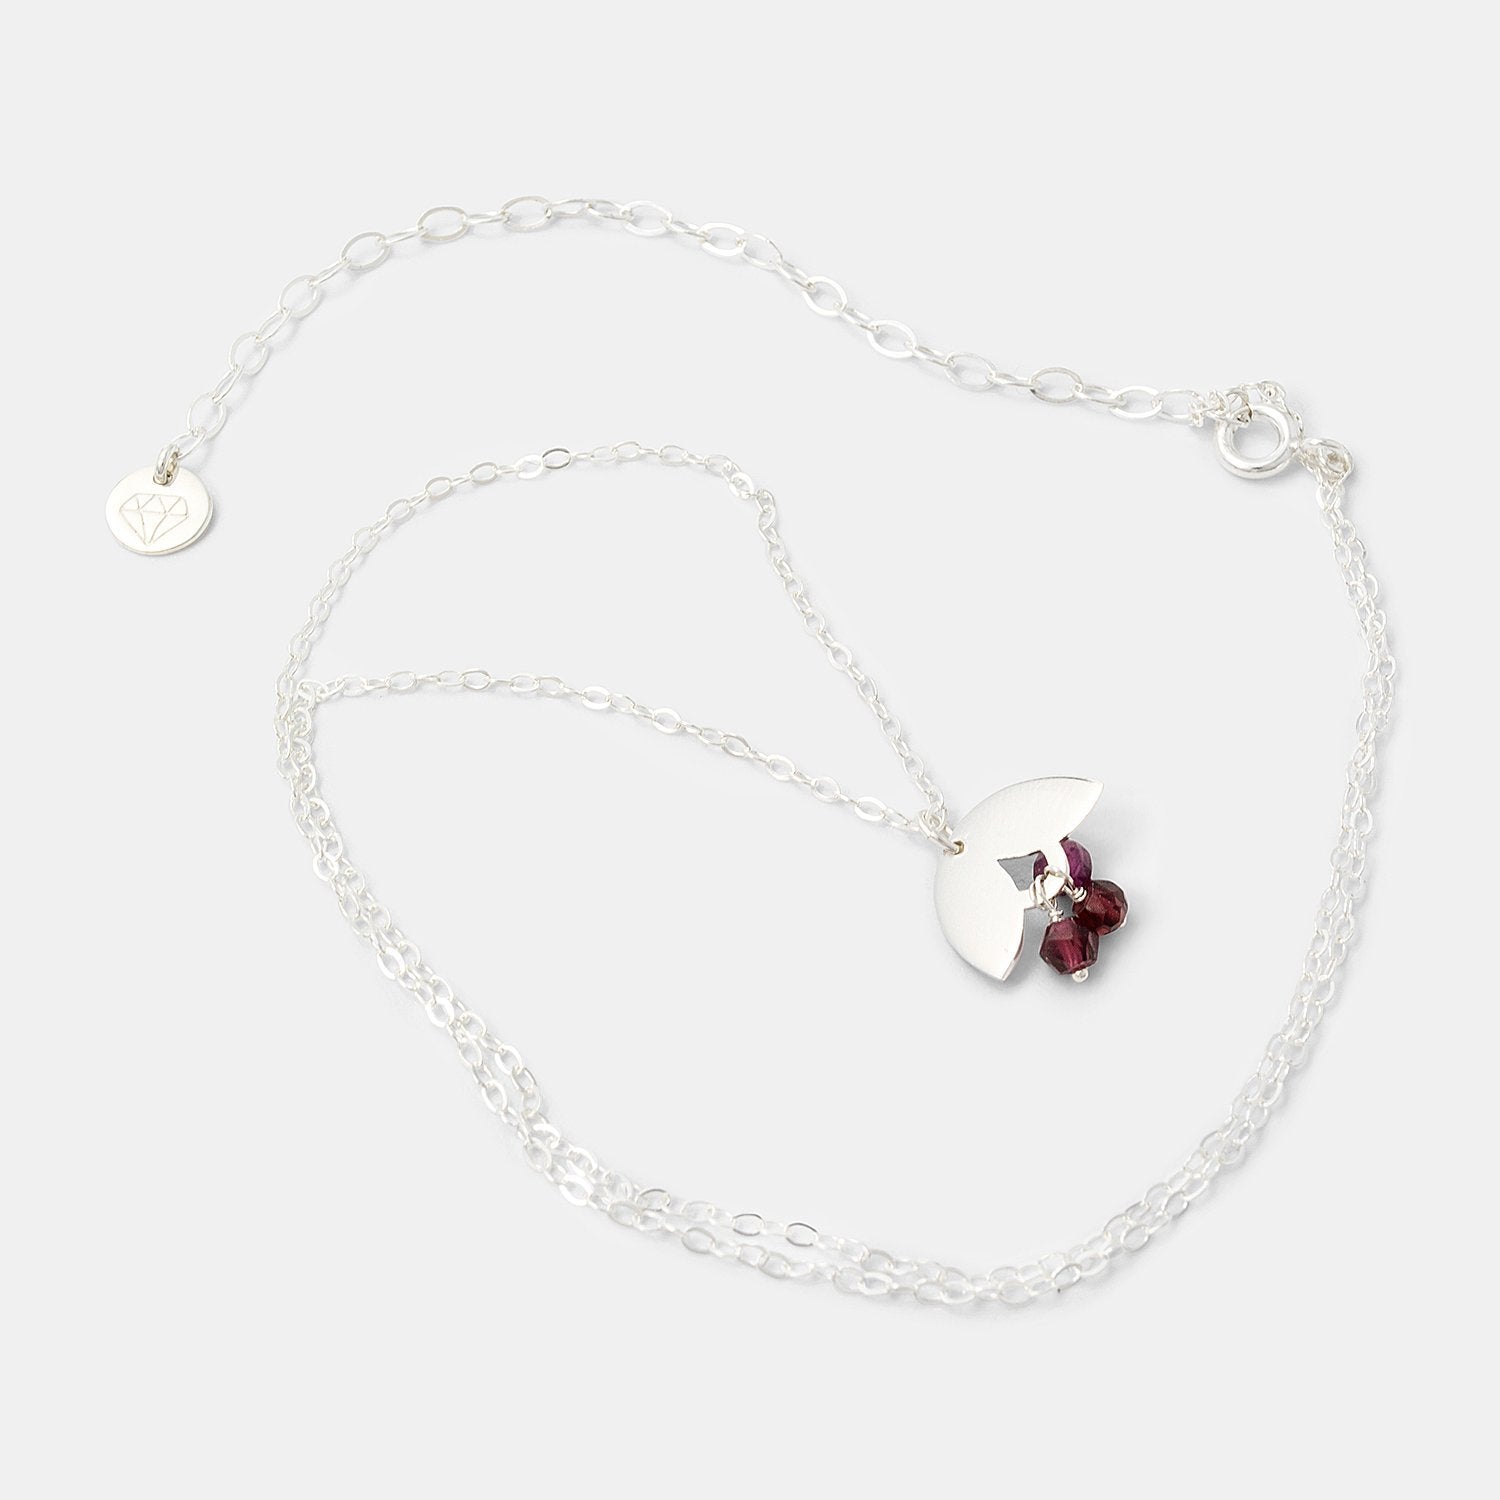 Leaves & rose garnets necklace - Simone Walsh Jewellery Australia